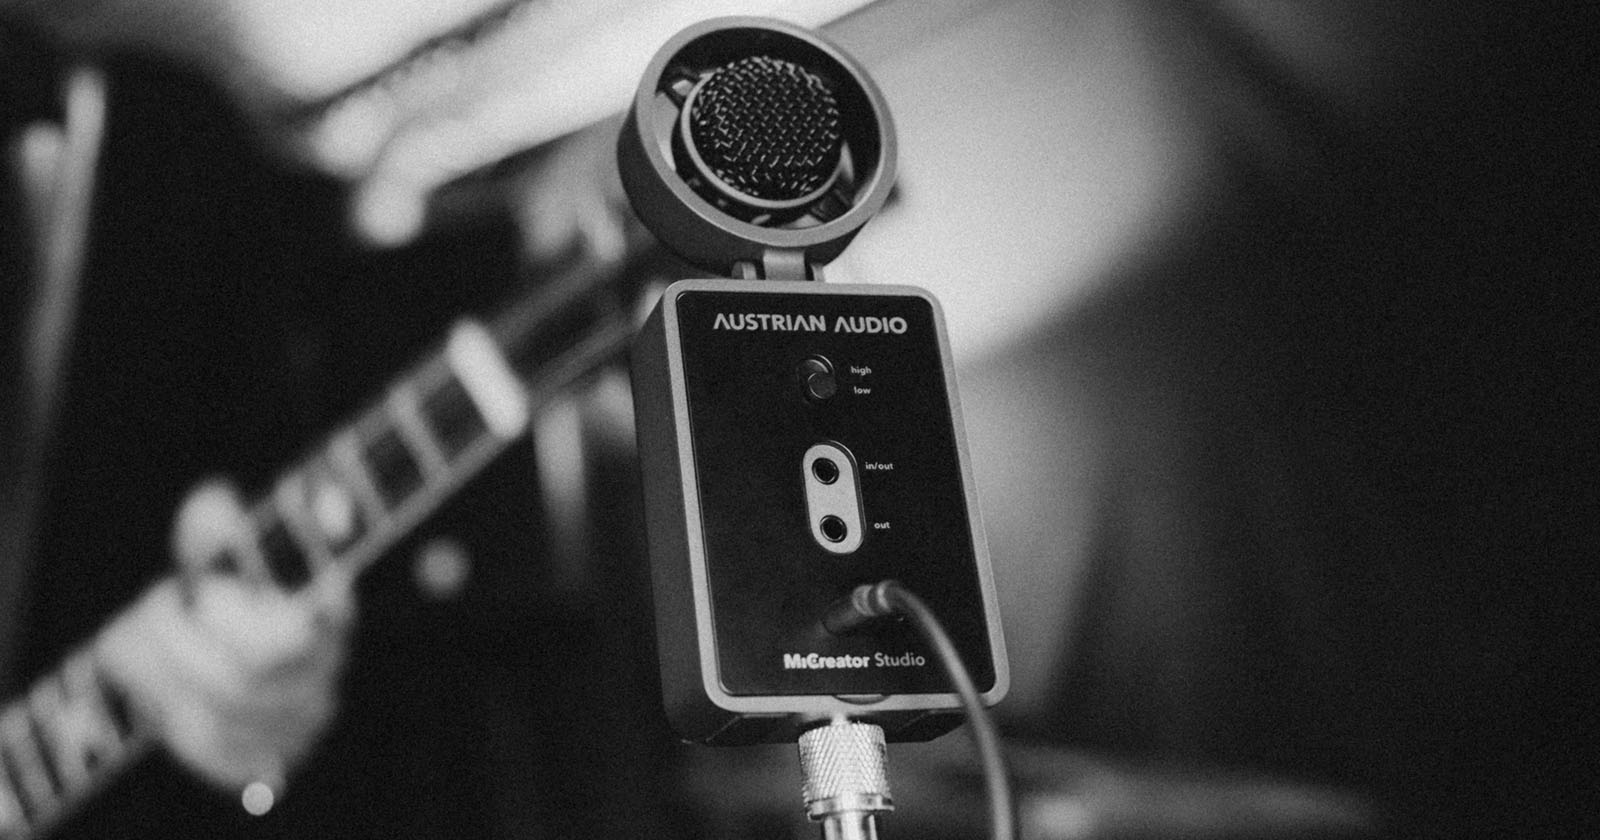  austrian audio micreator studio recording system offers versatility 